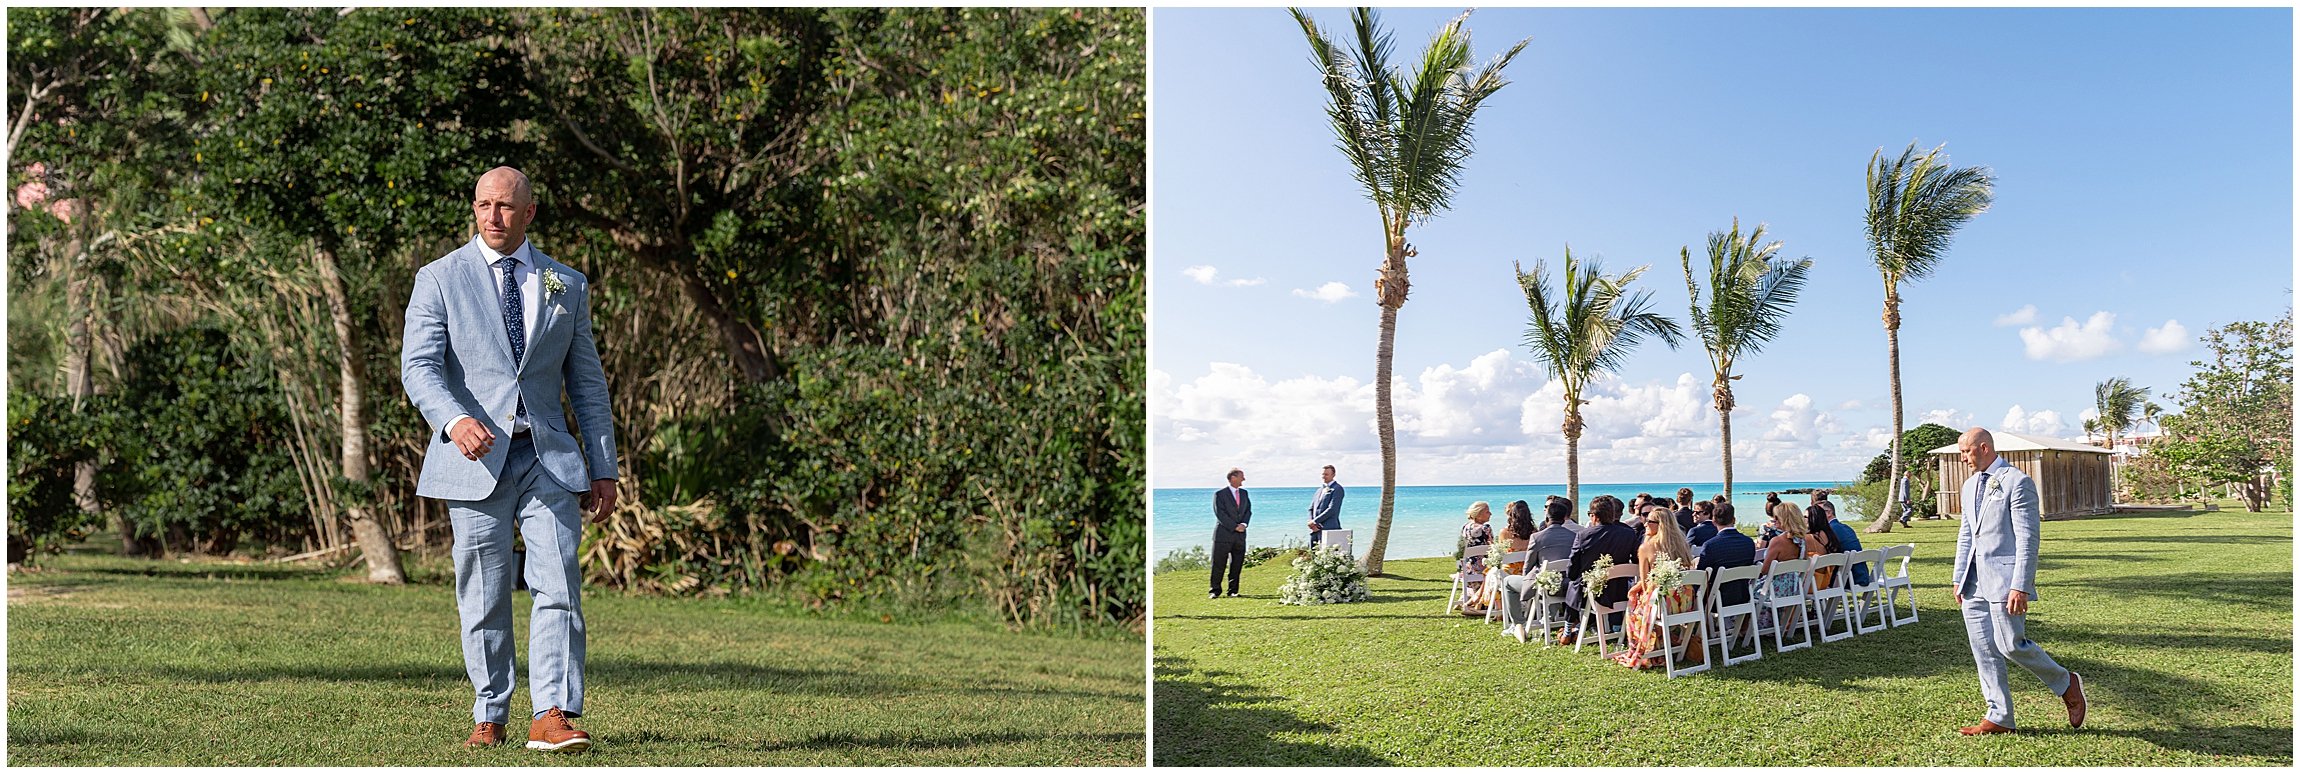 Bermuda Wedding Photographer_Cambridge Beaches_025.jpg